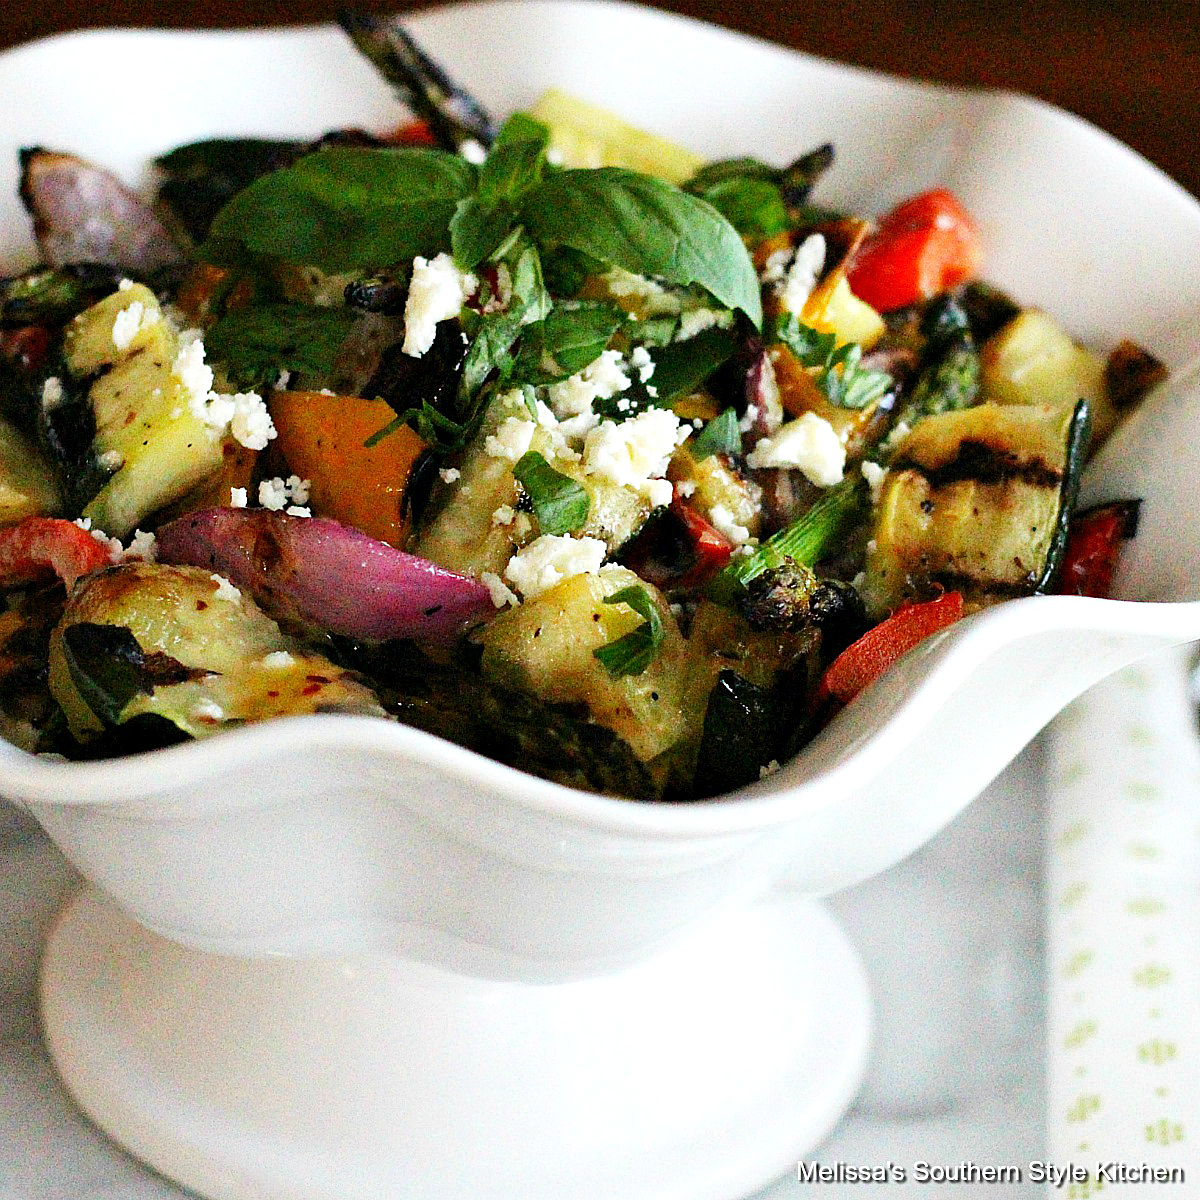 https://www.melissassouthernstylekitchen.com/wp-content/uploads/2014/06/Grilled-Vegetable-Salad-with-an-Apple-Cider-Honey-Vinaigrettefeature.jpg